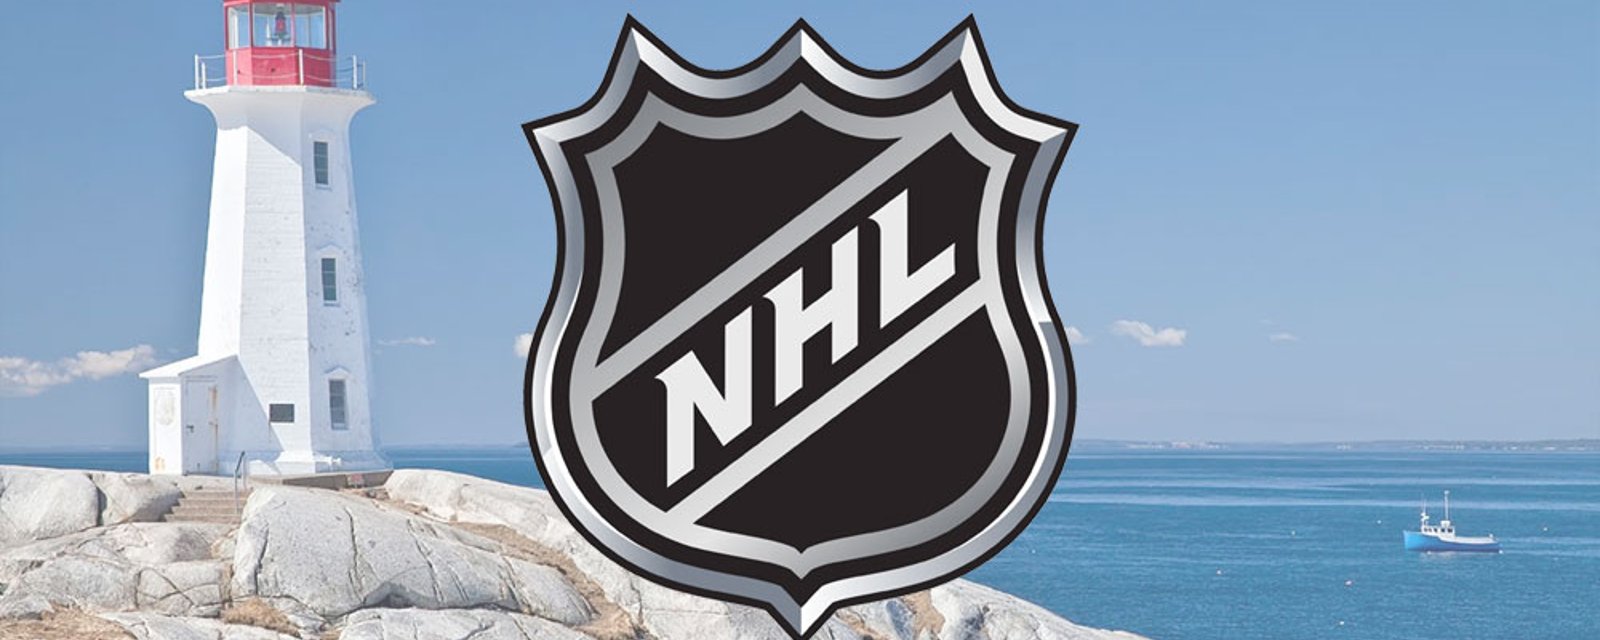 NHL outdoor game coming to… Halifax, Nova Scotia!?